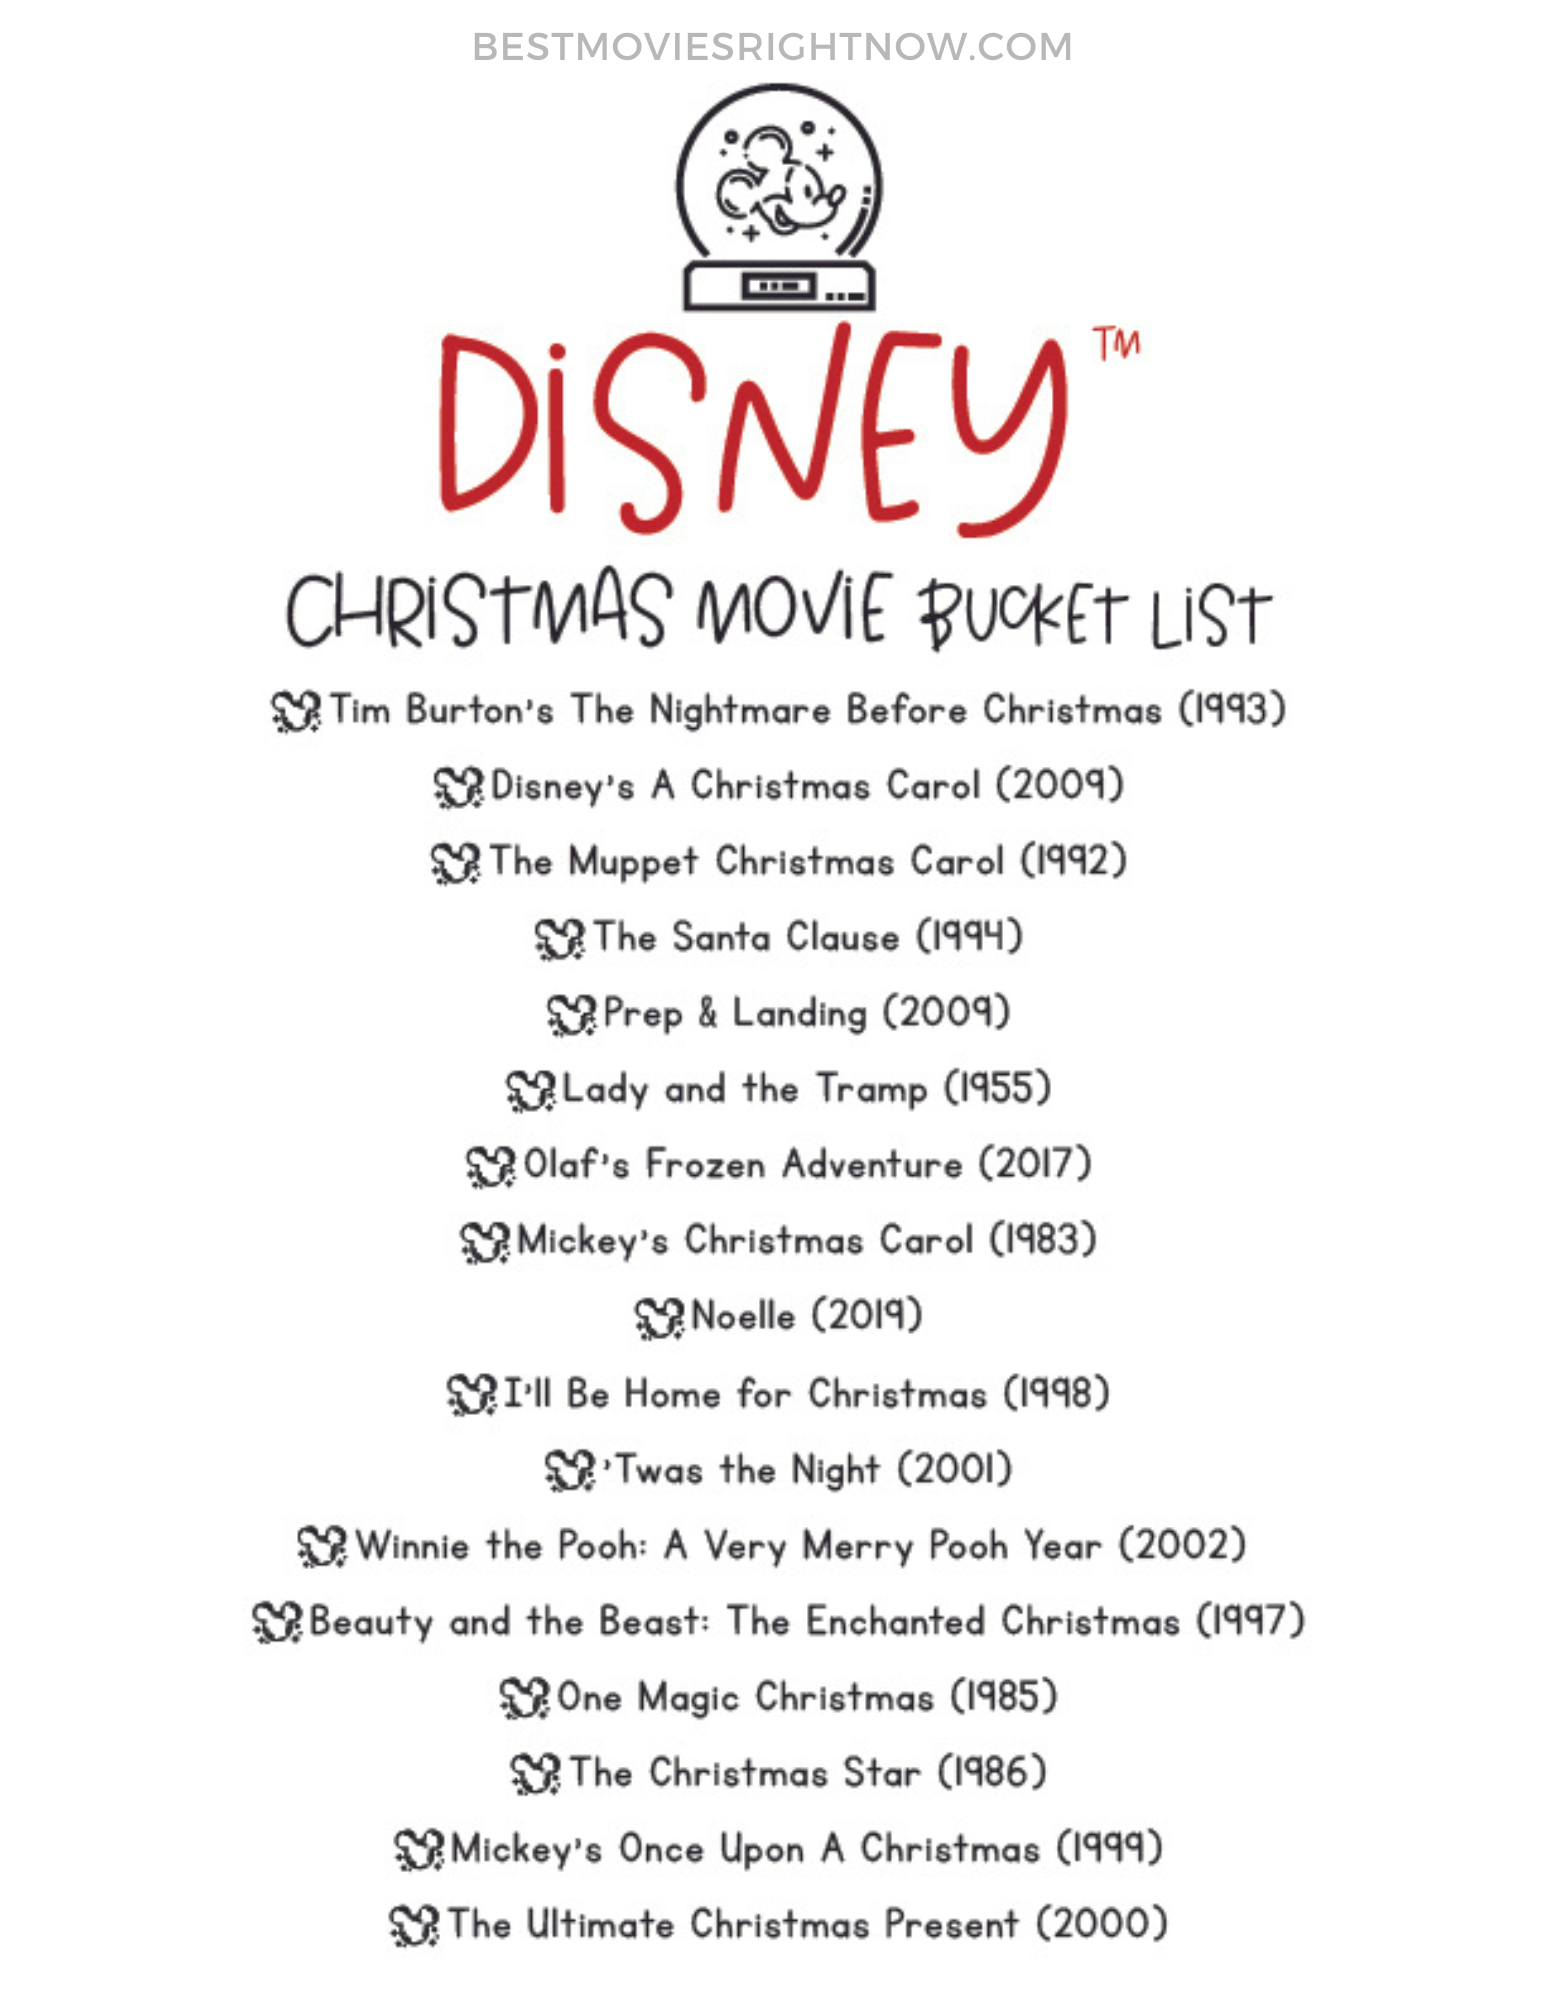 Disney Christmas Movie Bucket List image